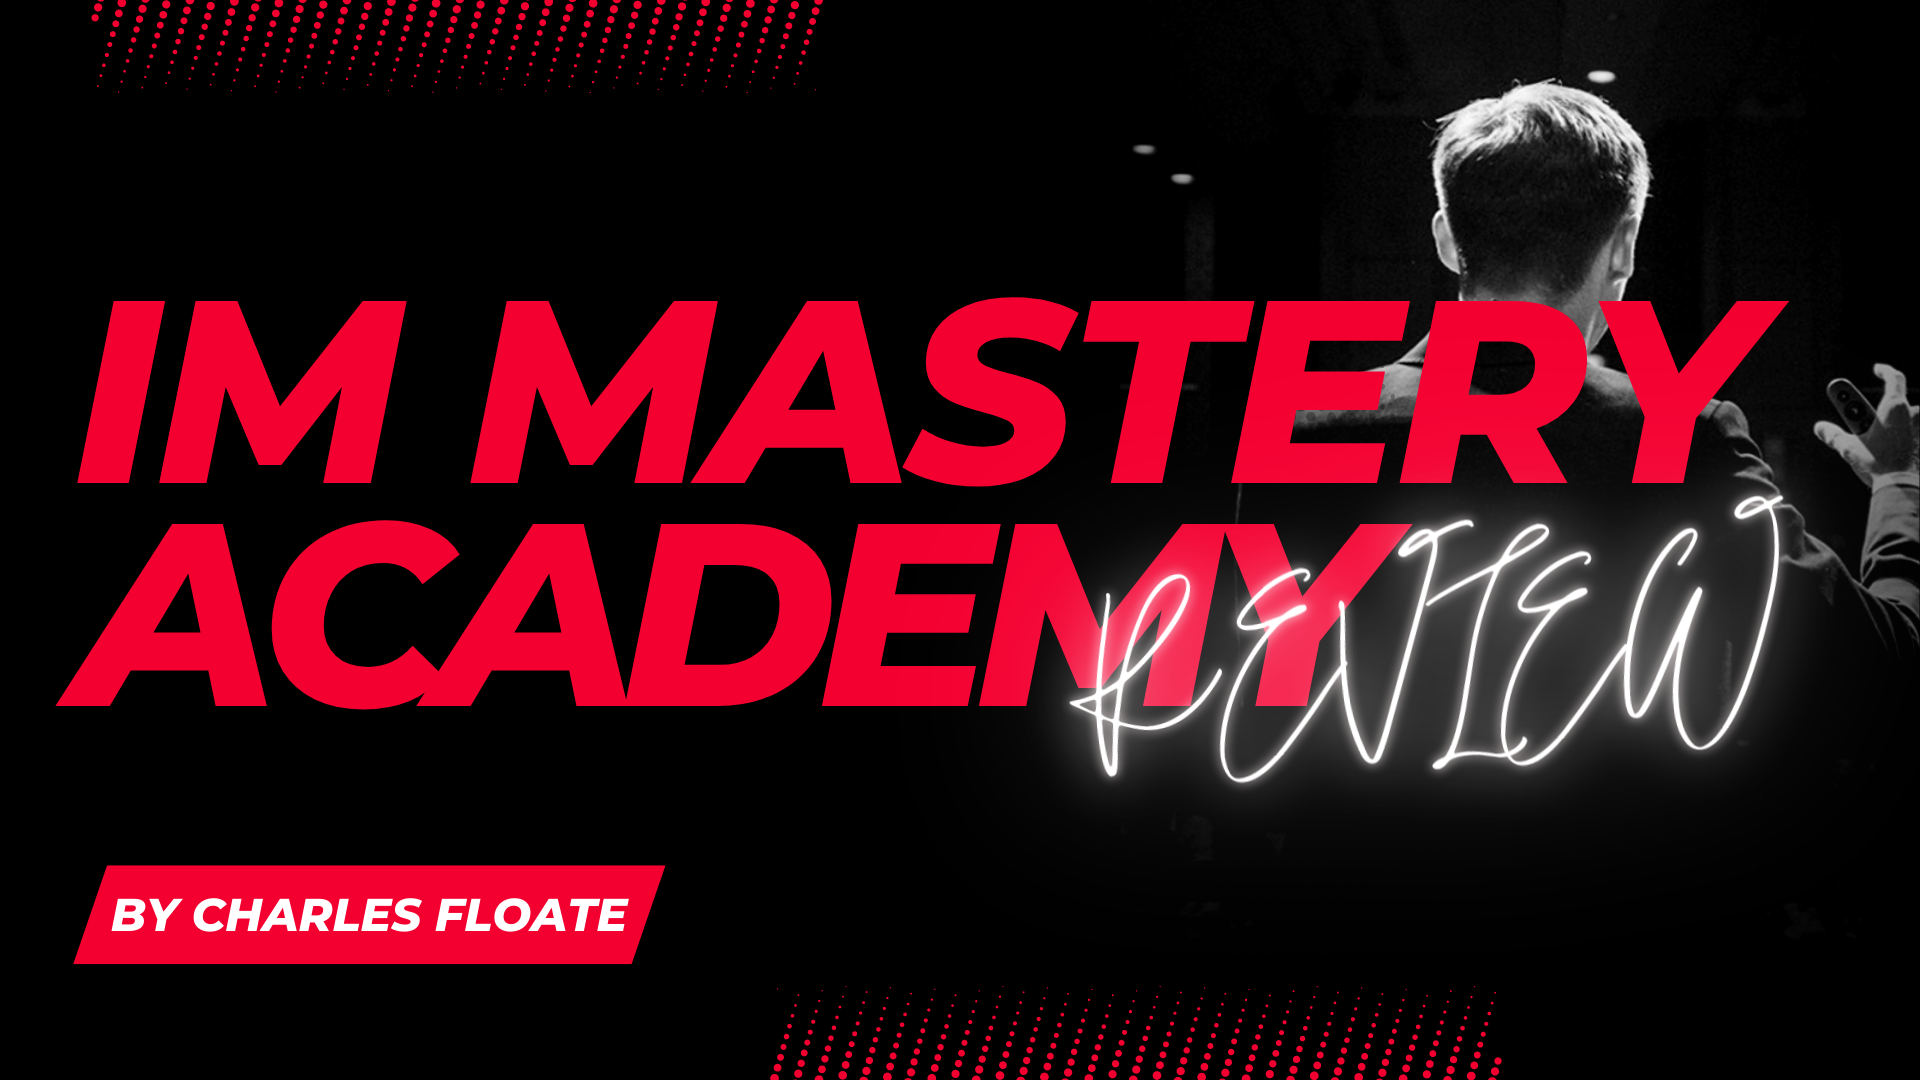 Mastery academy forex